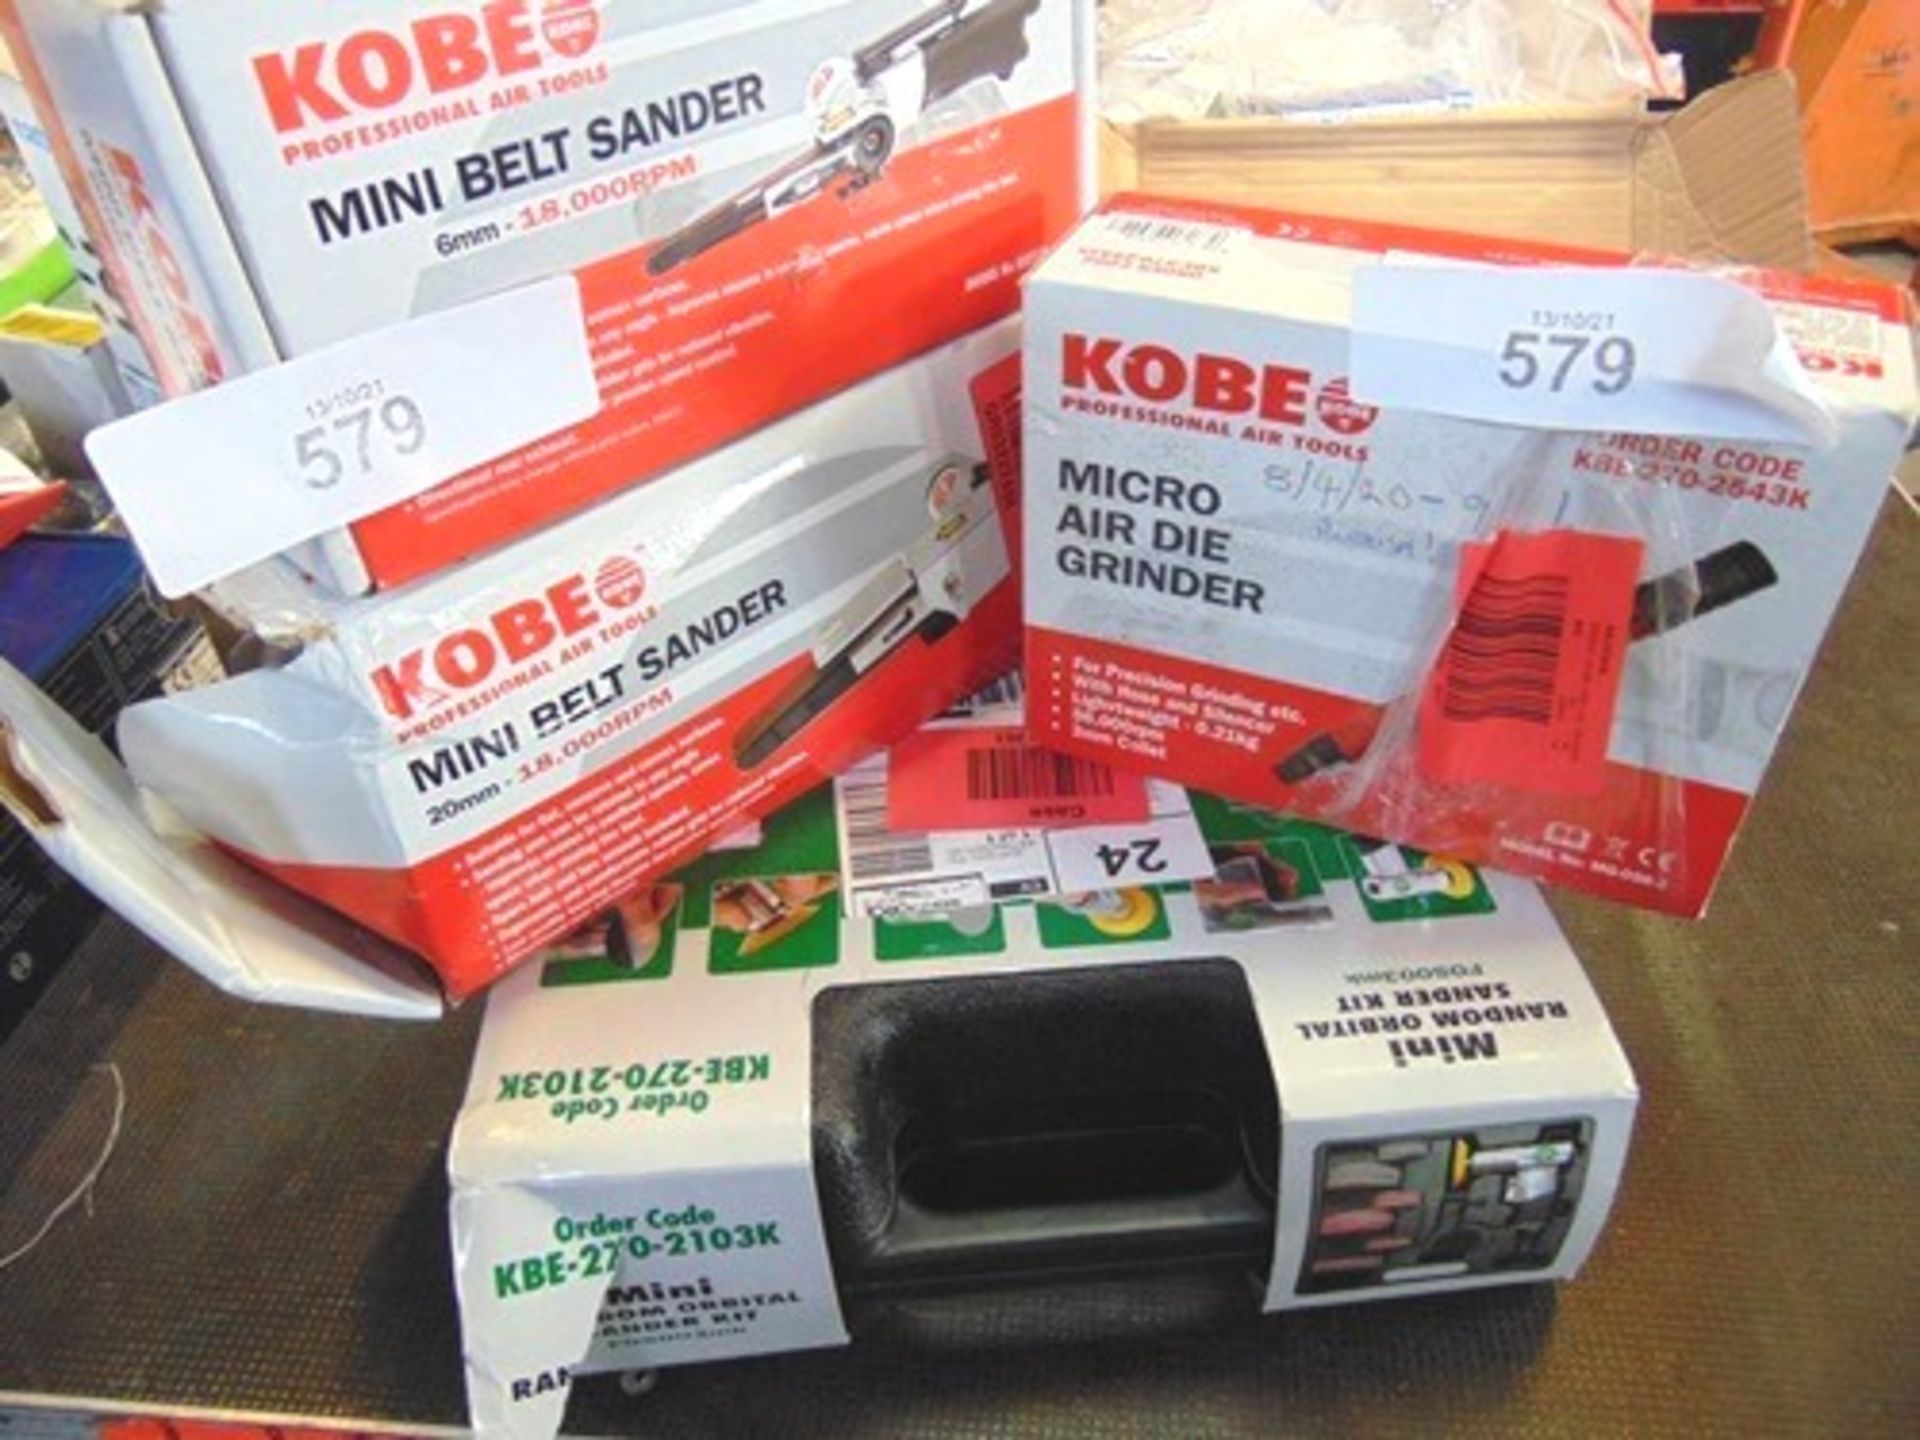 A selection of air tool sanders including 1 x Kobe mini belt sander 20mm KBE-270-4200K, 1 x Kobe